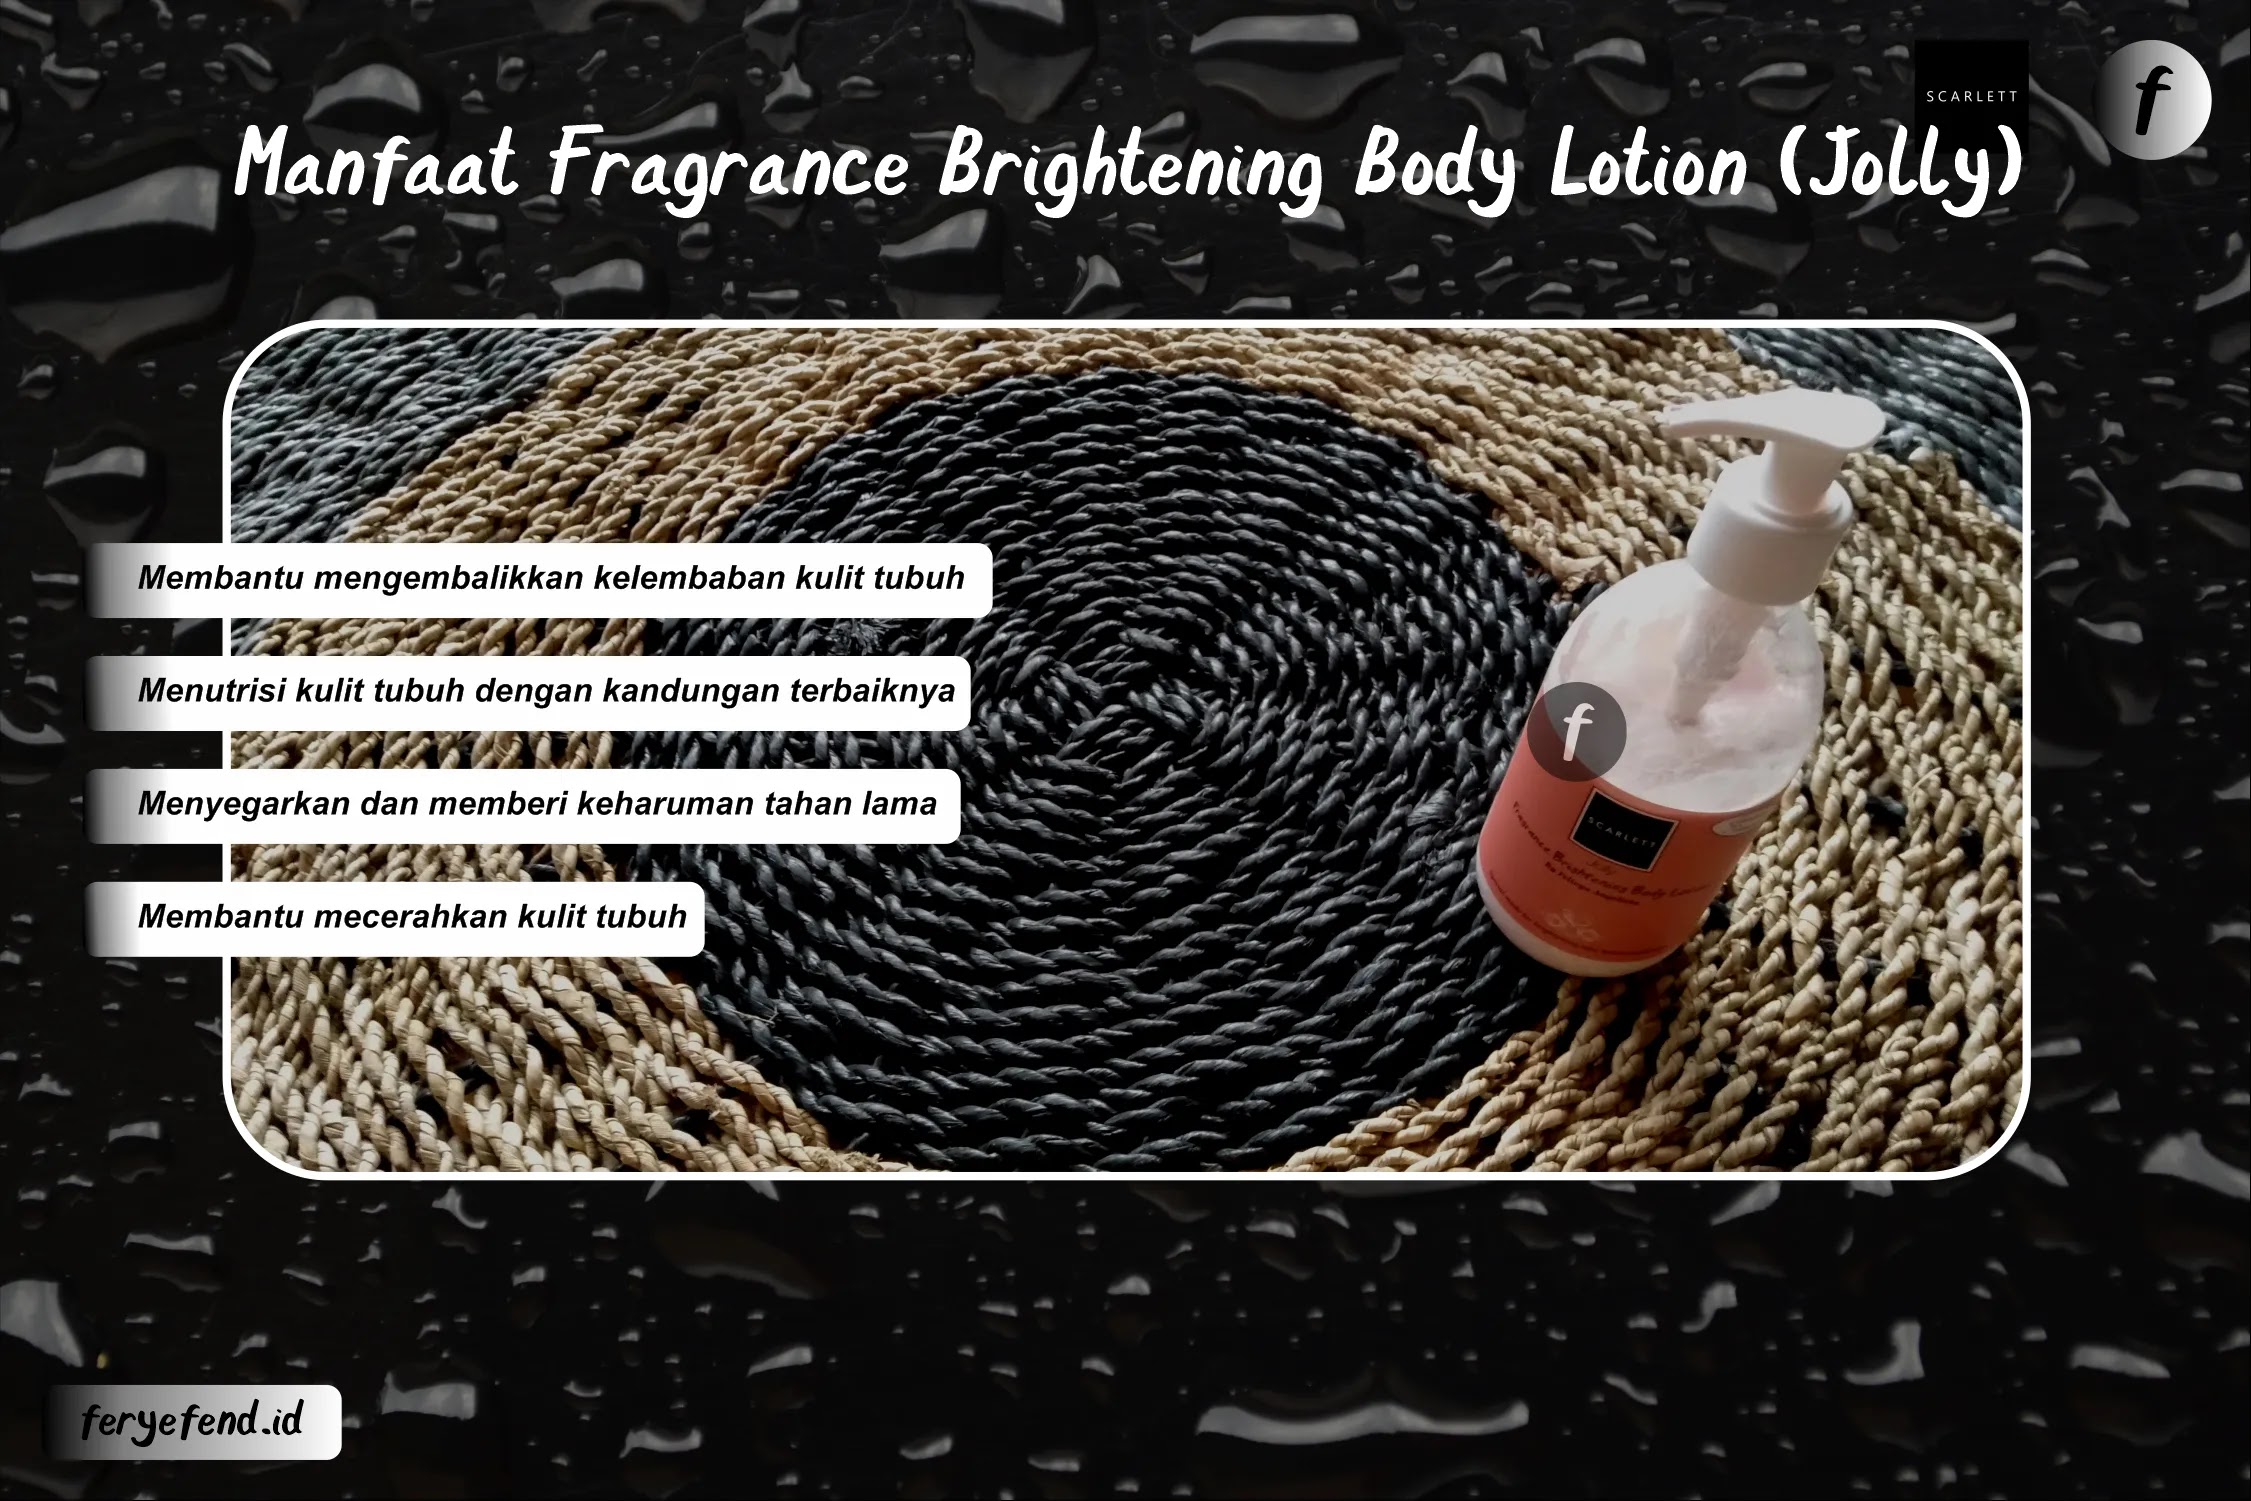 Manfaat Fragrance Brightening Body Lotion (Jolly)